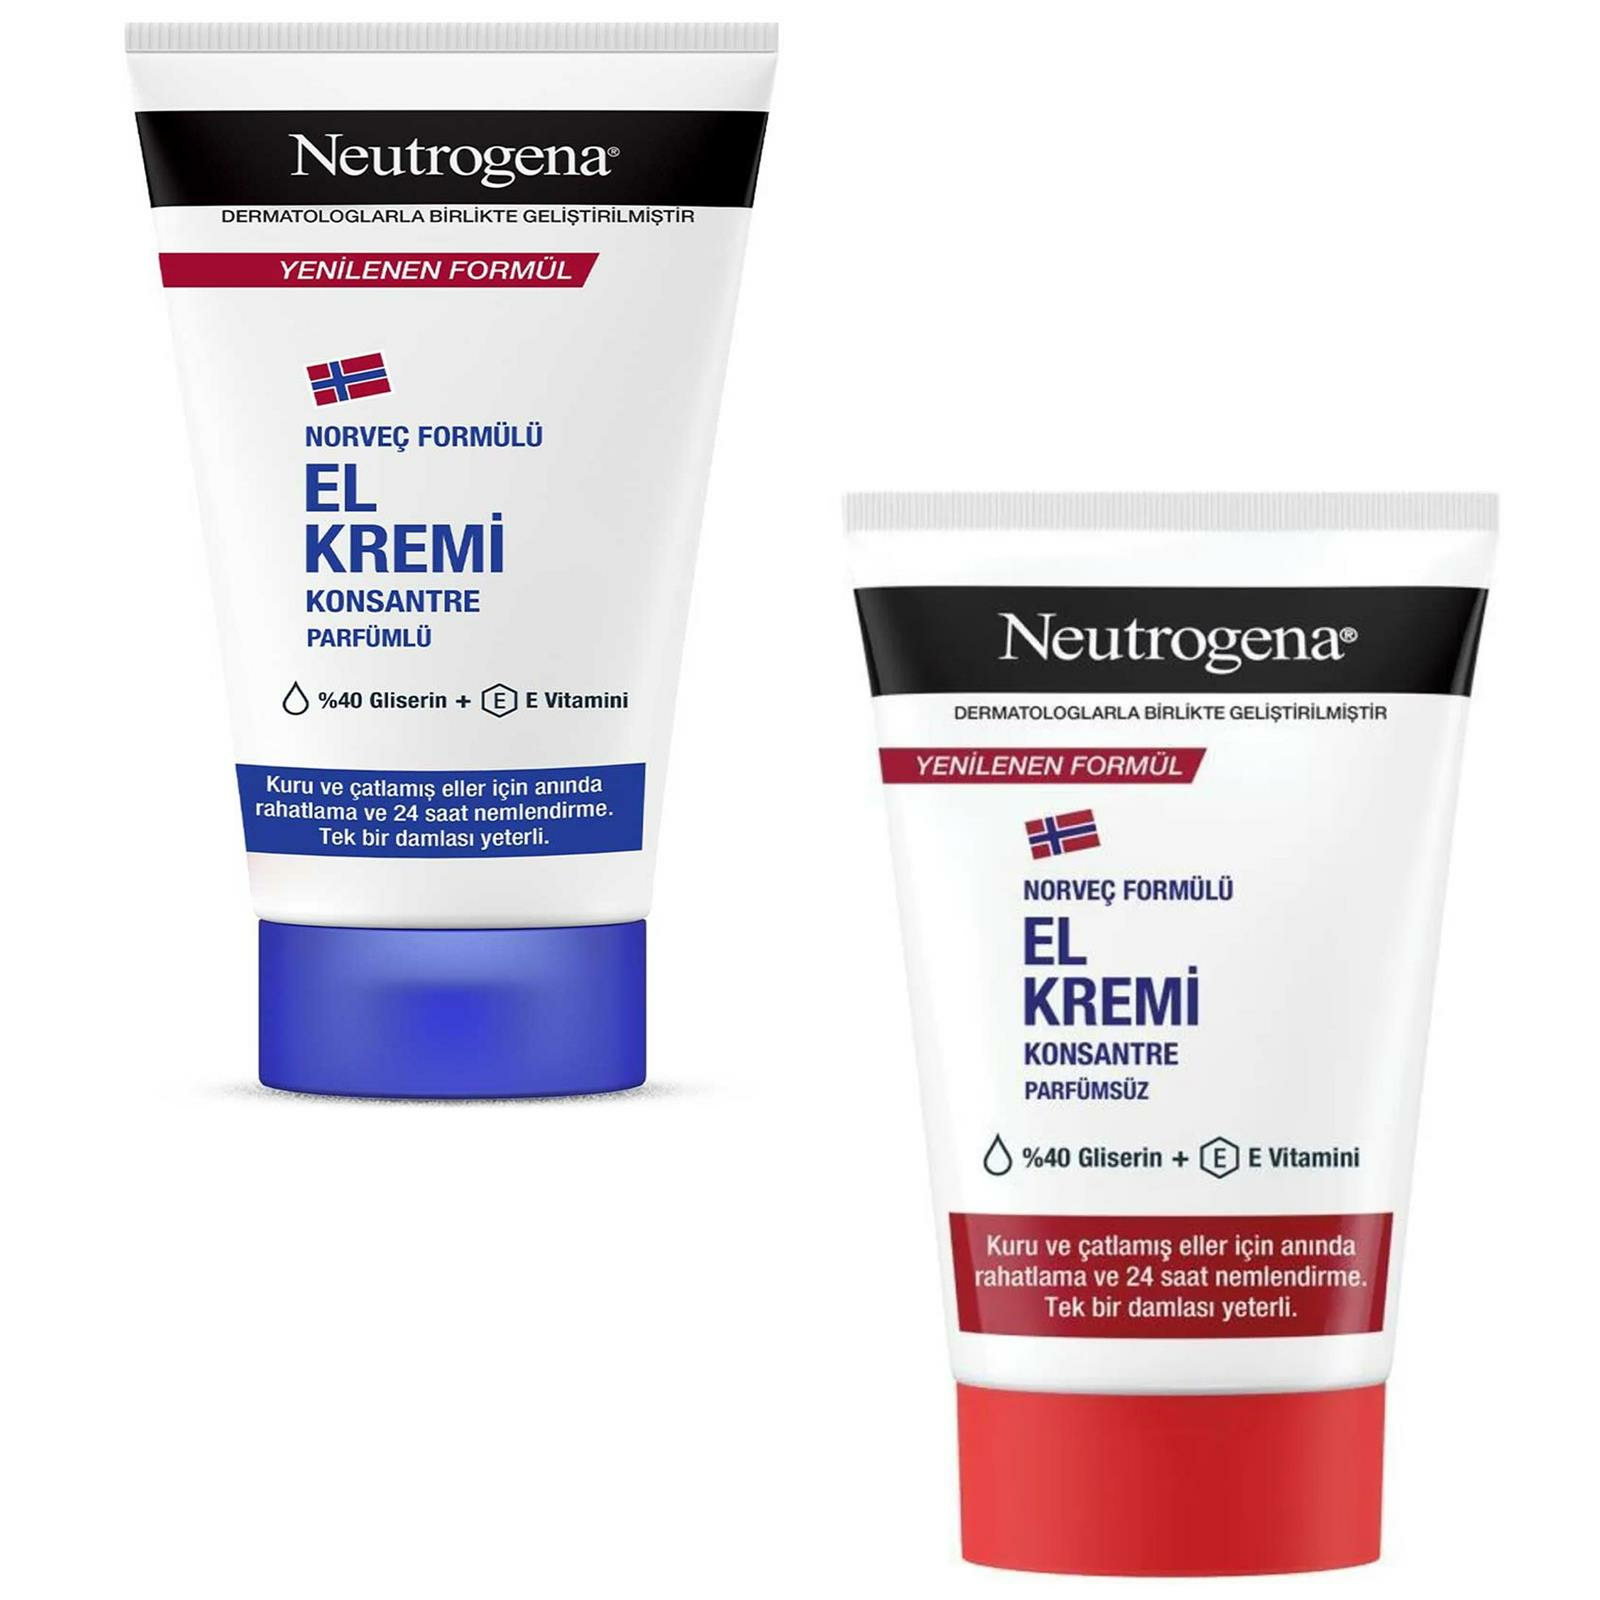 Neutrogena Konsantre Parfümlü El Kremi 50 ml + Neutrogena Parfümsüz El Kremi 50 ml